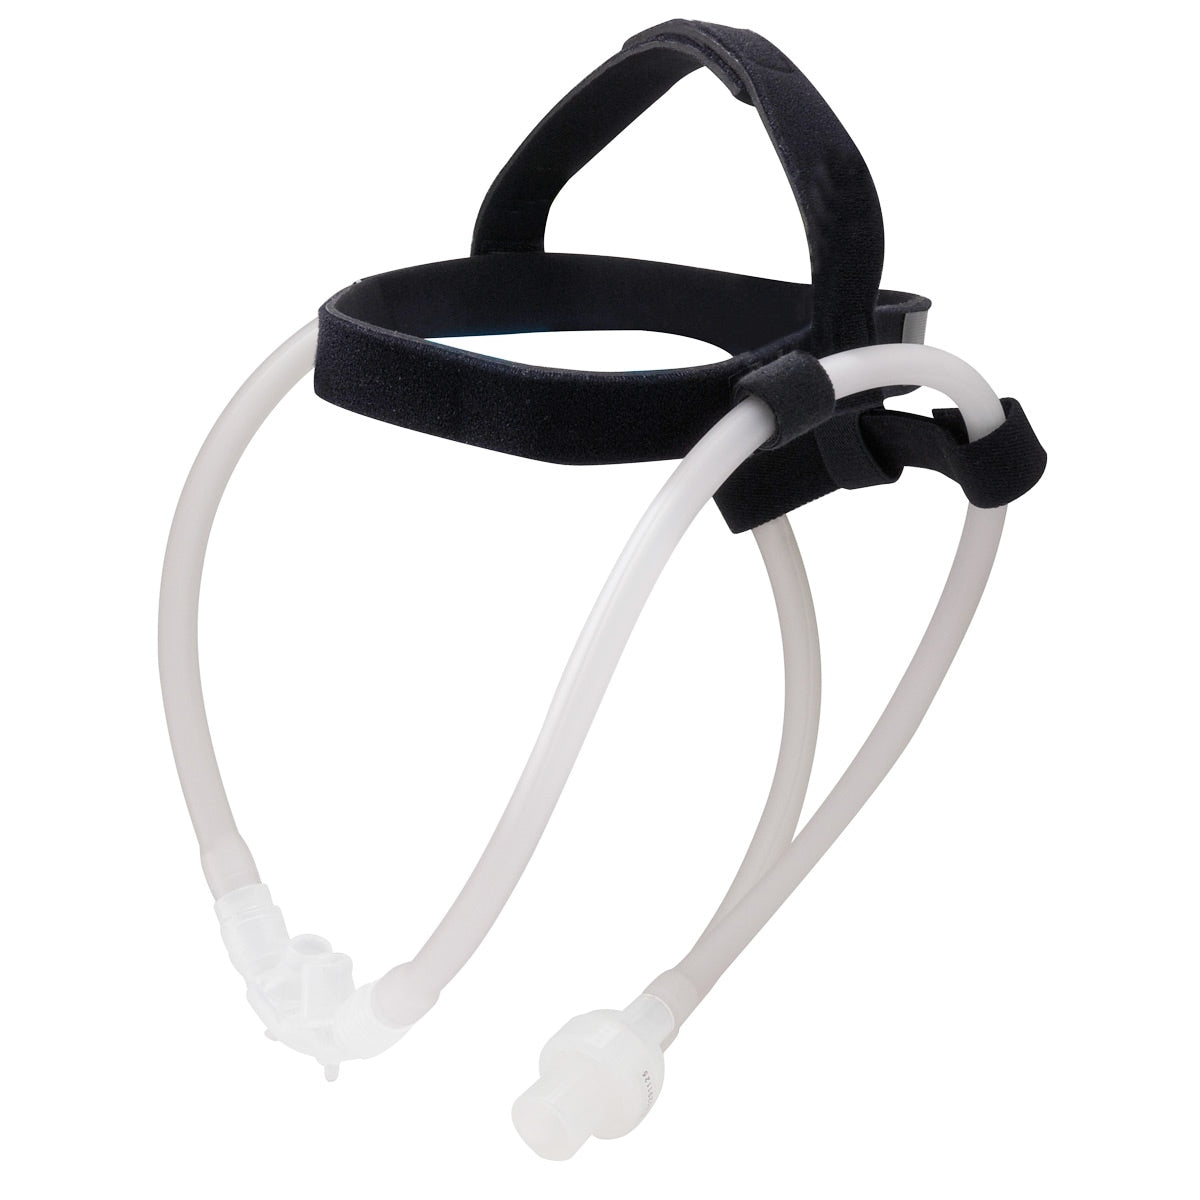 Type IIR surgical strap mask - Klap